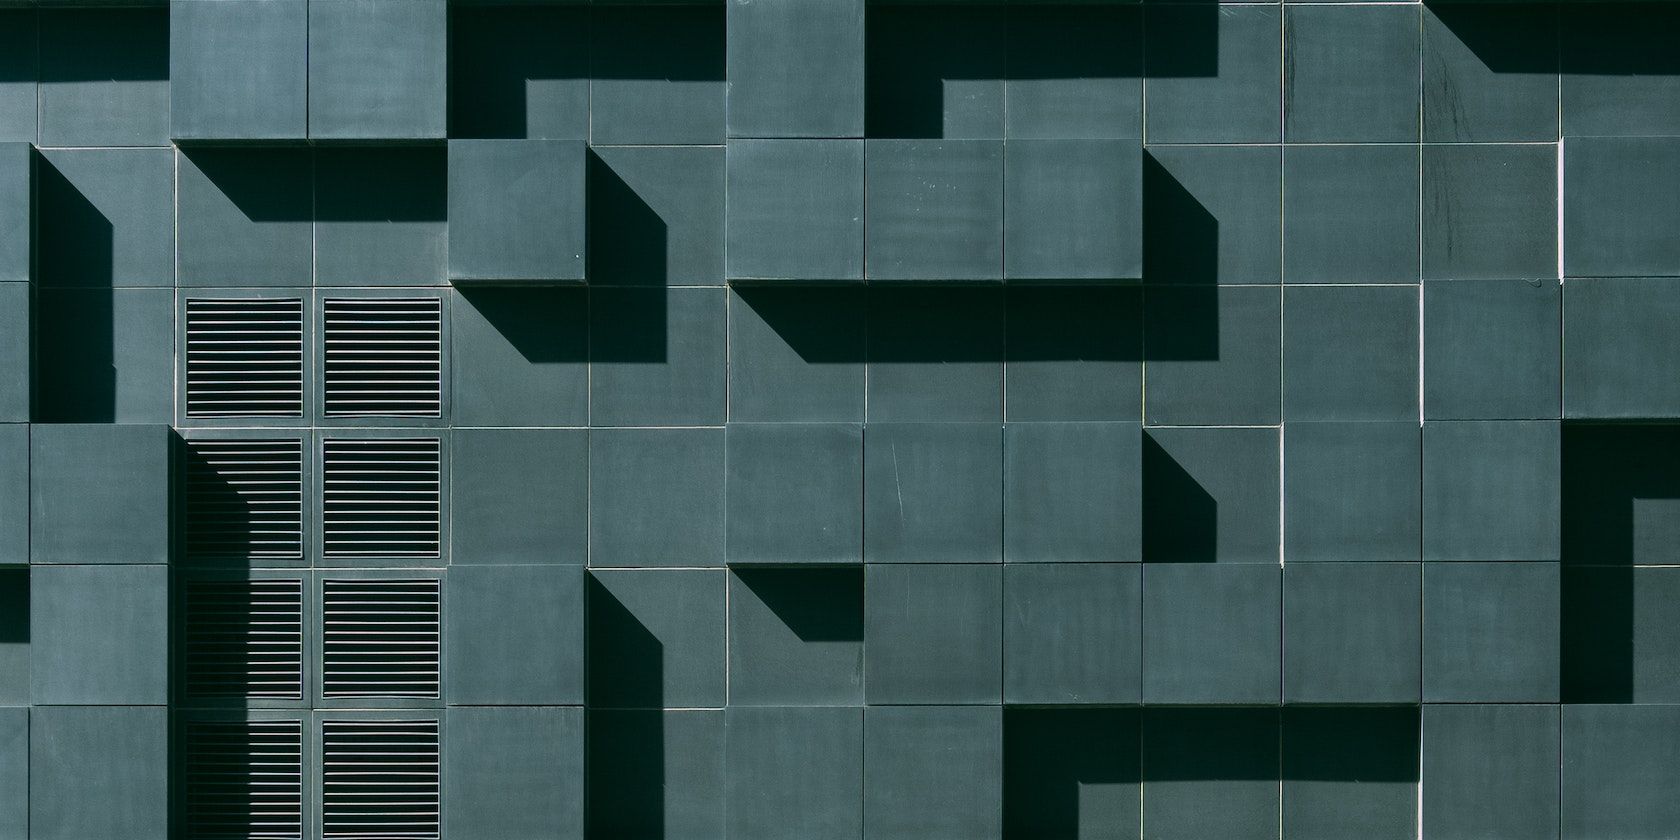 Green Concrete Building Exterior With Geometric Design